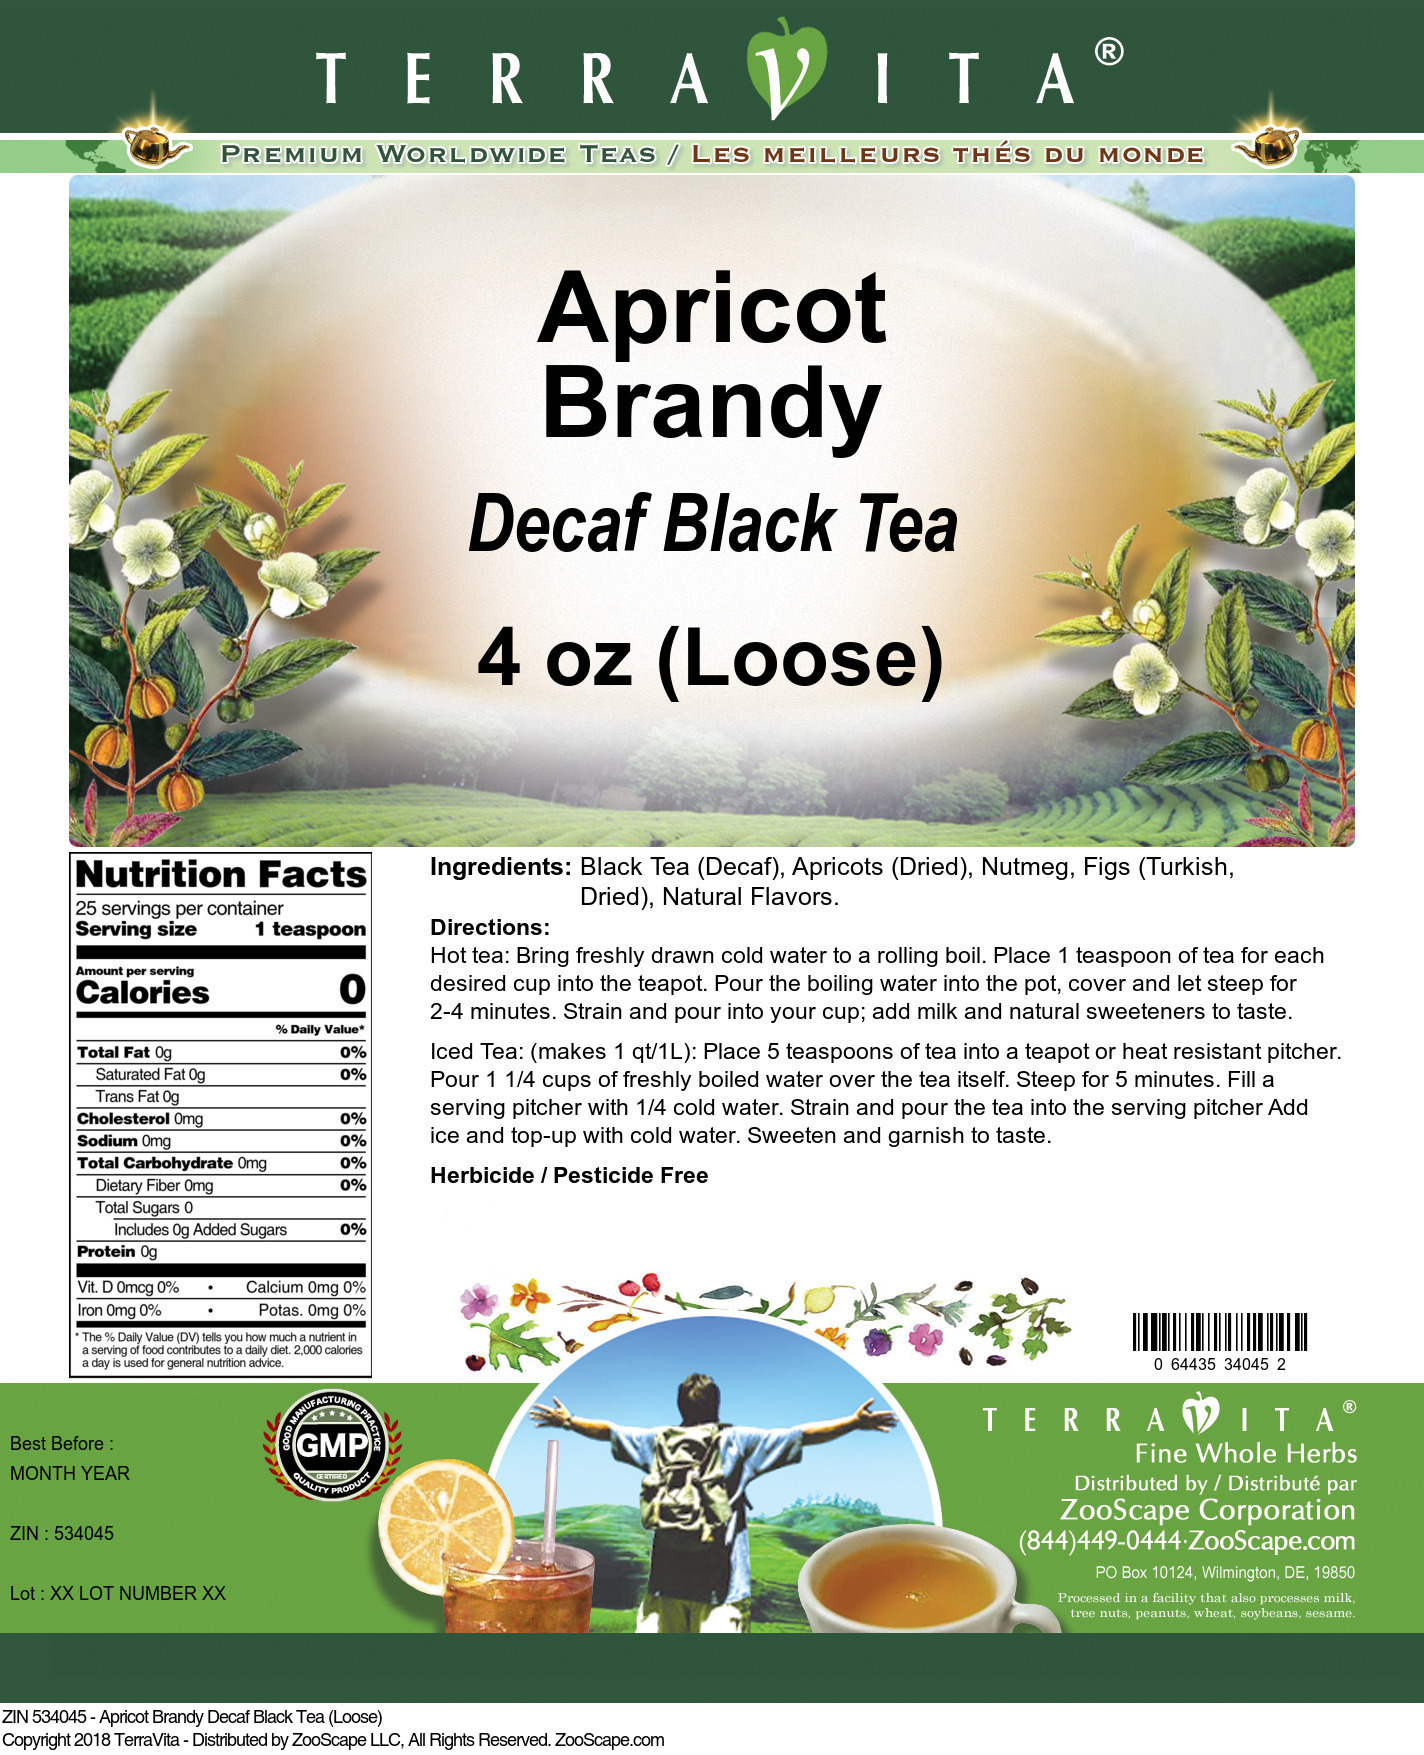 Apricot Brandy Decaf Black Tea (Loose) - Label